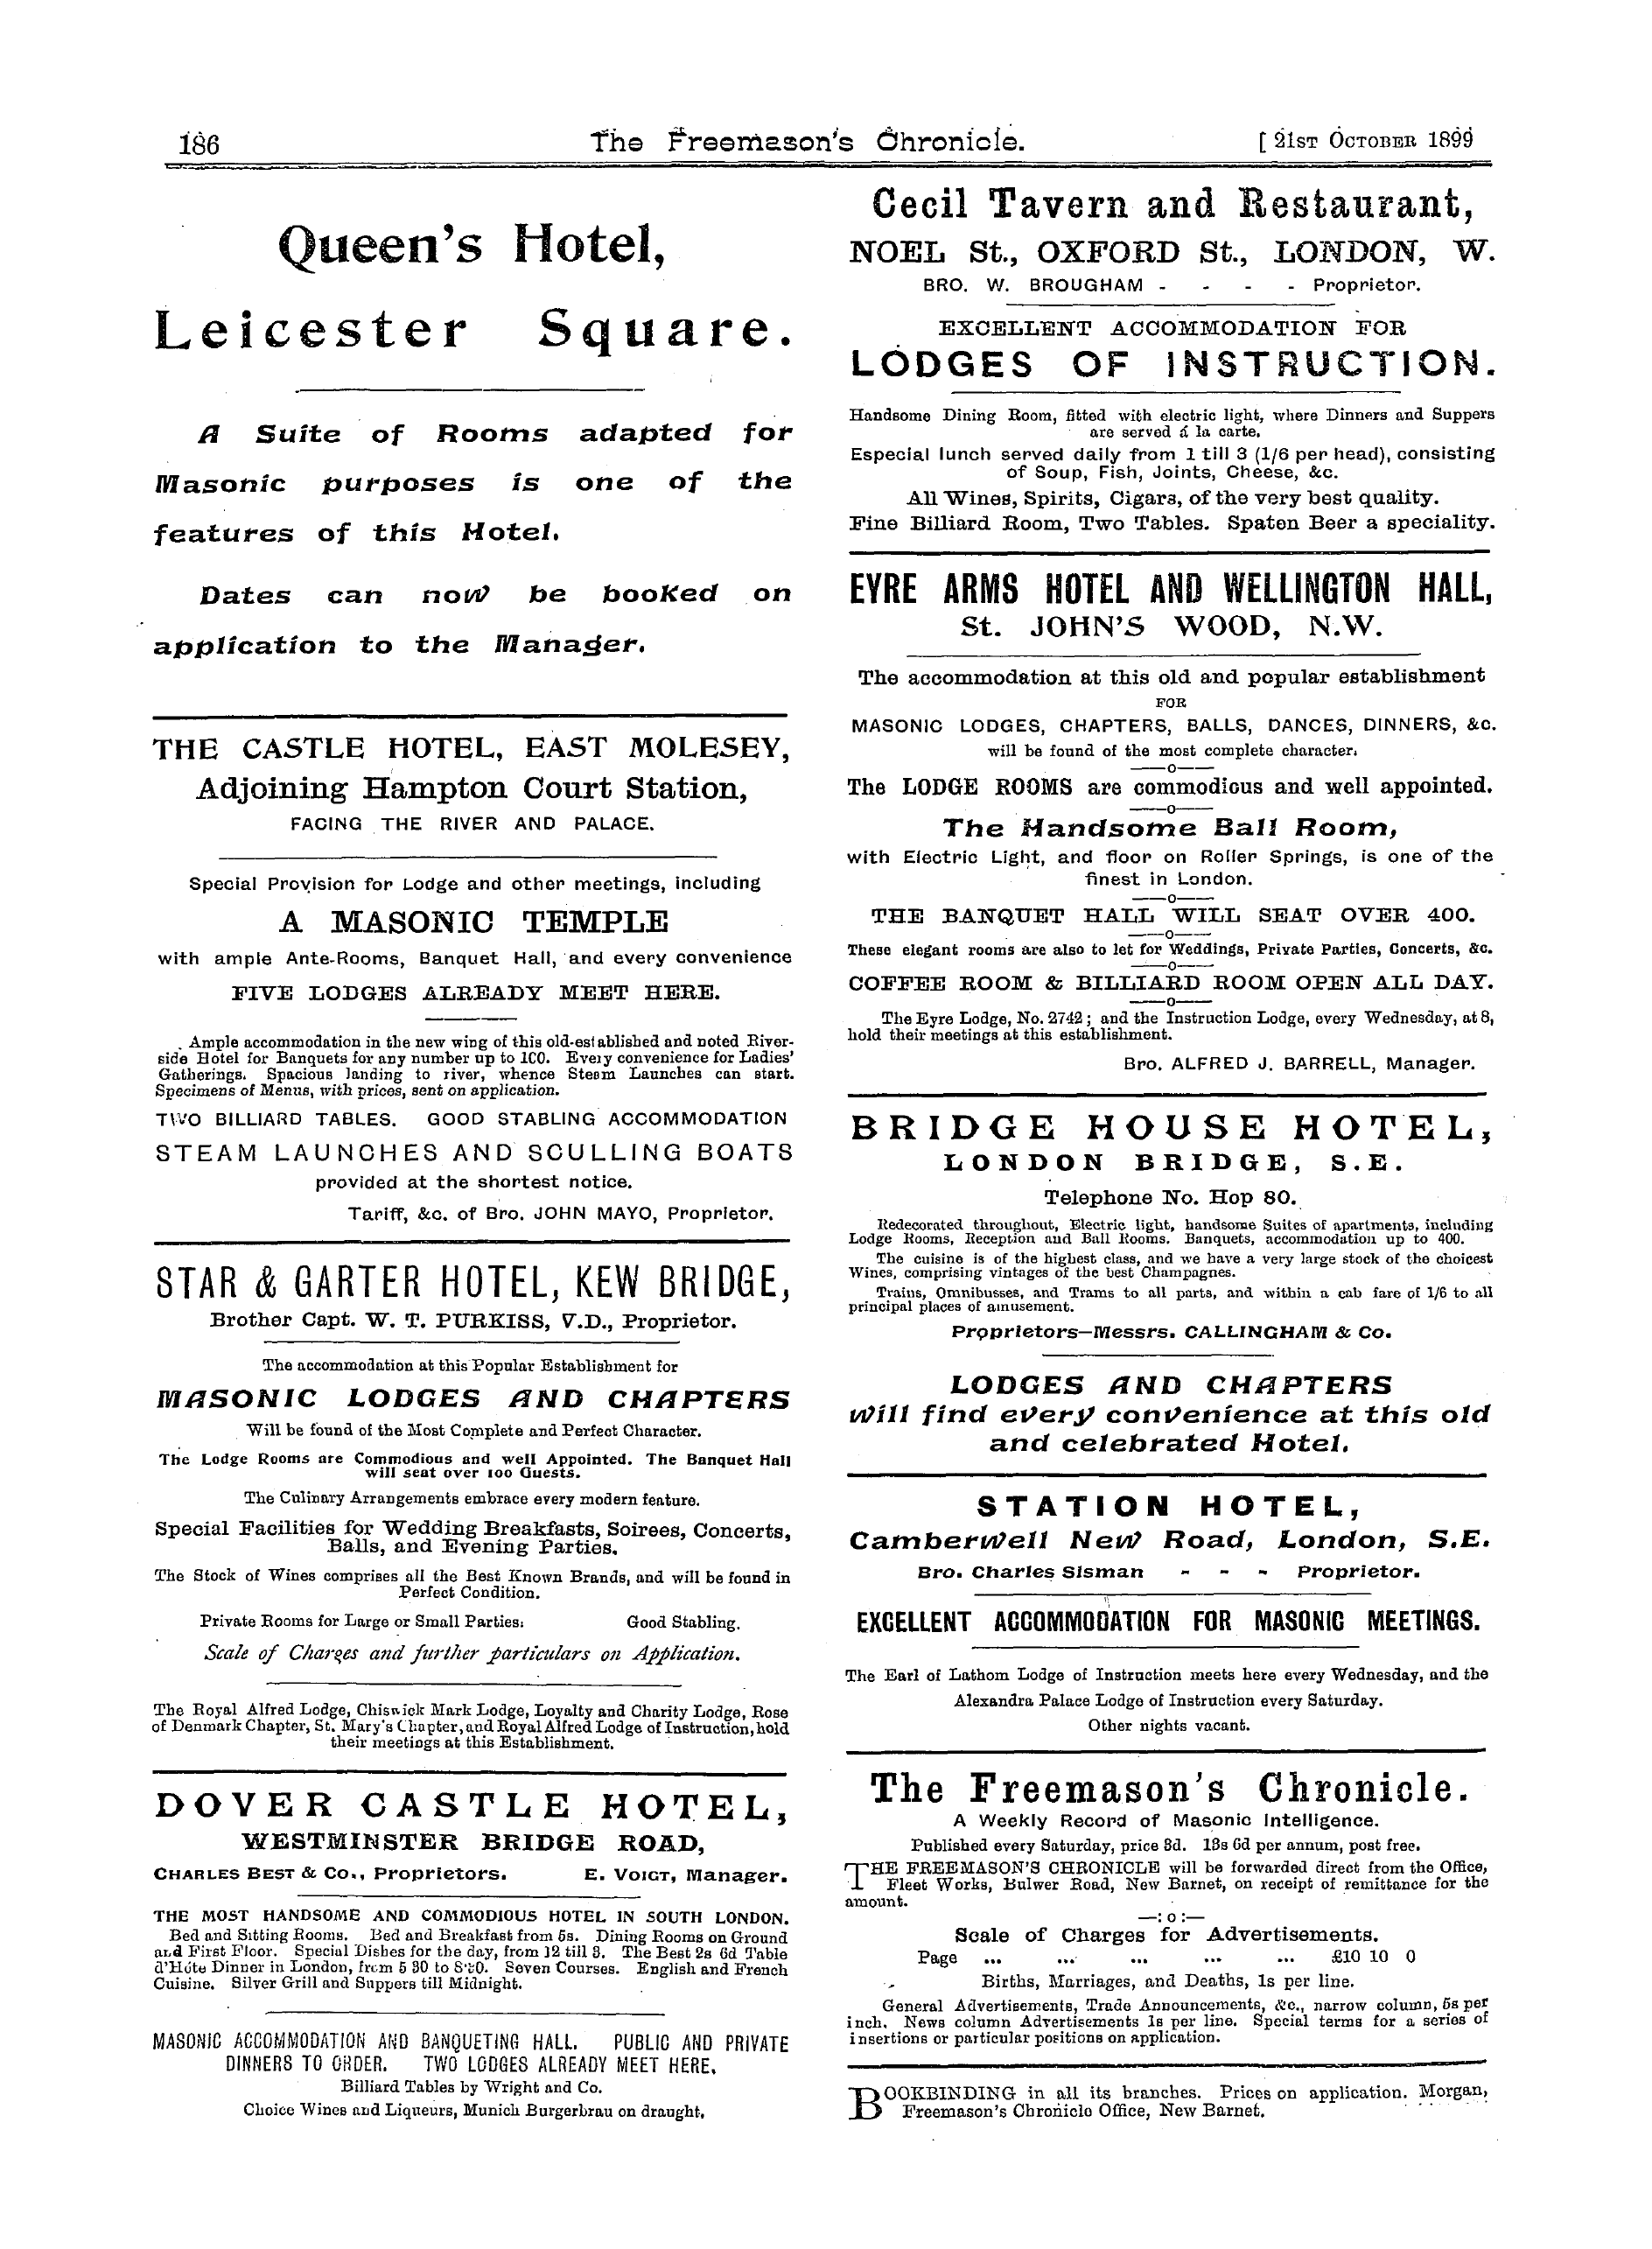 The Freemason's Chronicle: 1899-10-21 - Ad00602